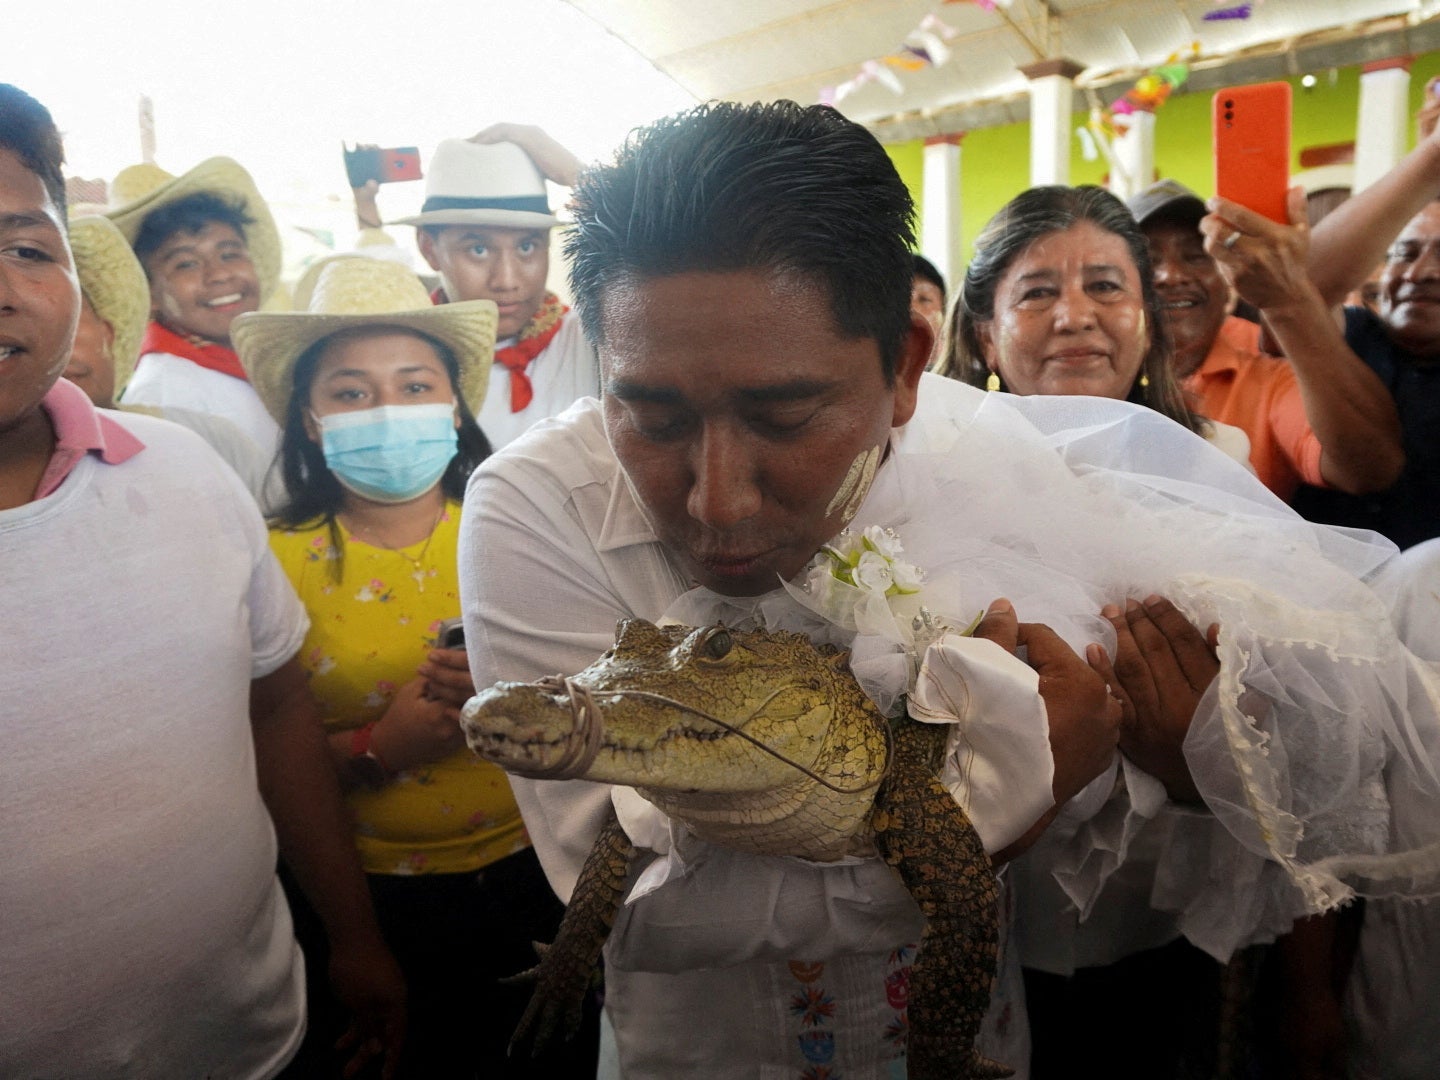 The mayor of San Pedro Huamelula kisses the alligator